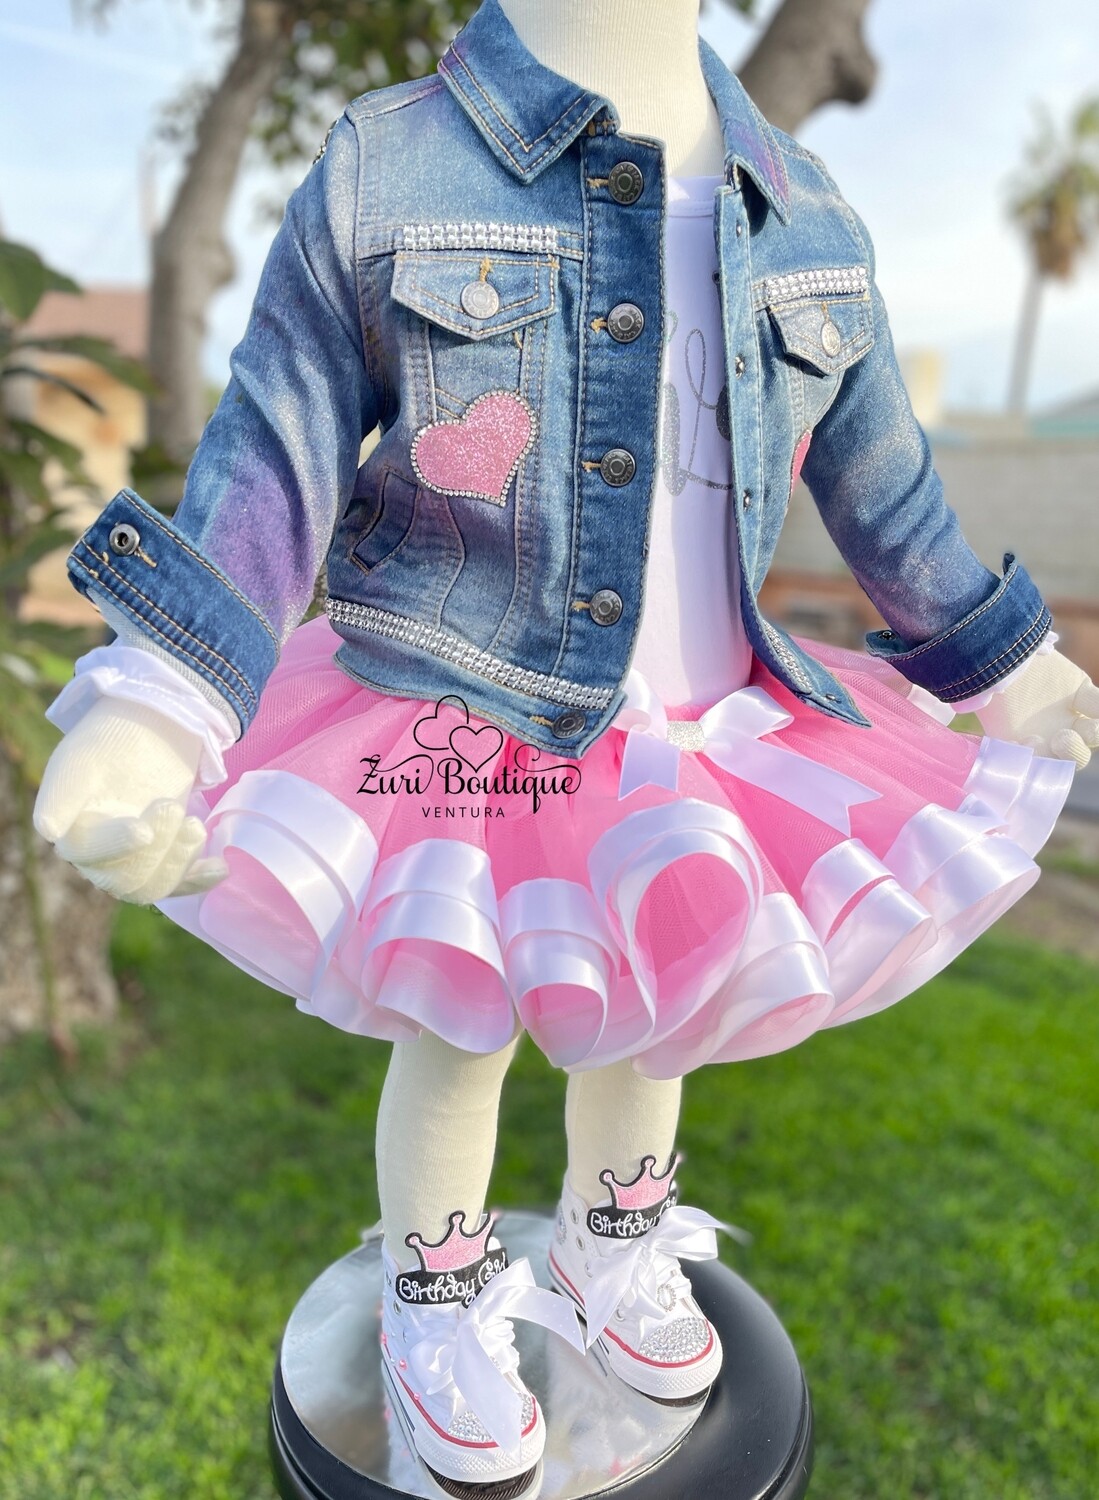 Rhinestone Birthday Girl tutu outfit with optional blinged denim jacket and shoes